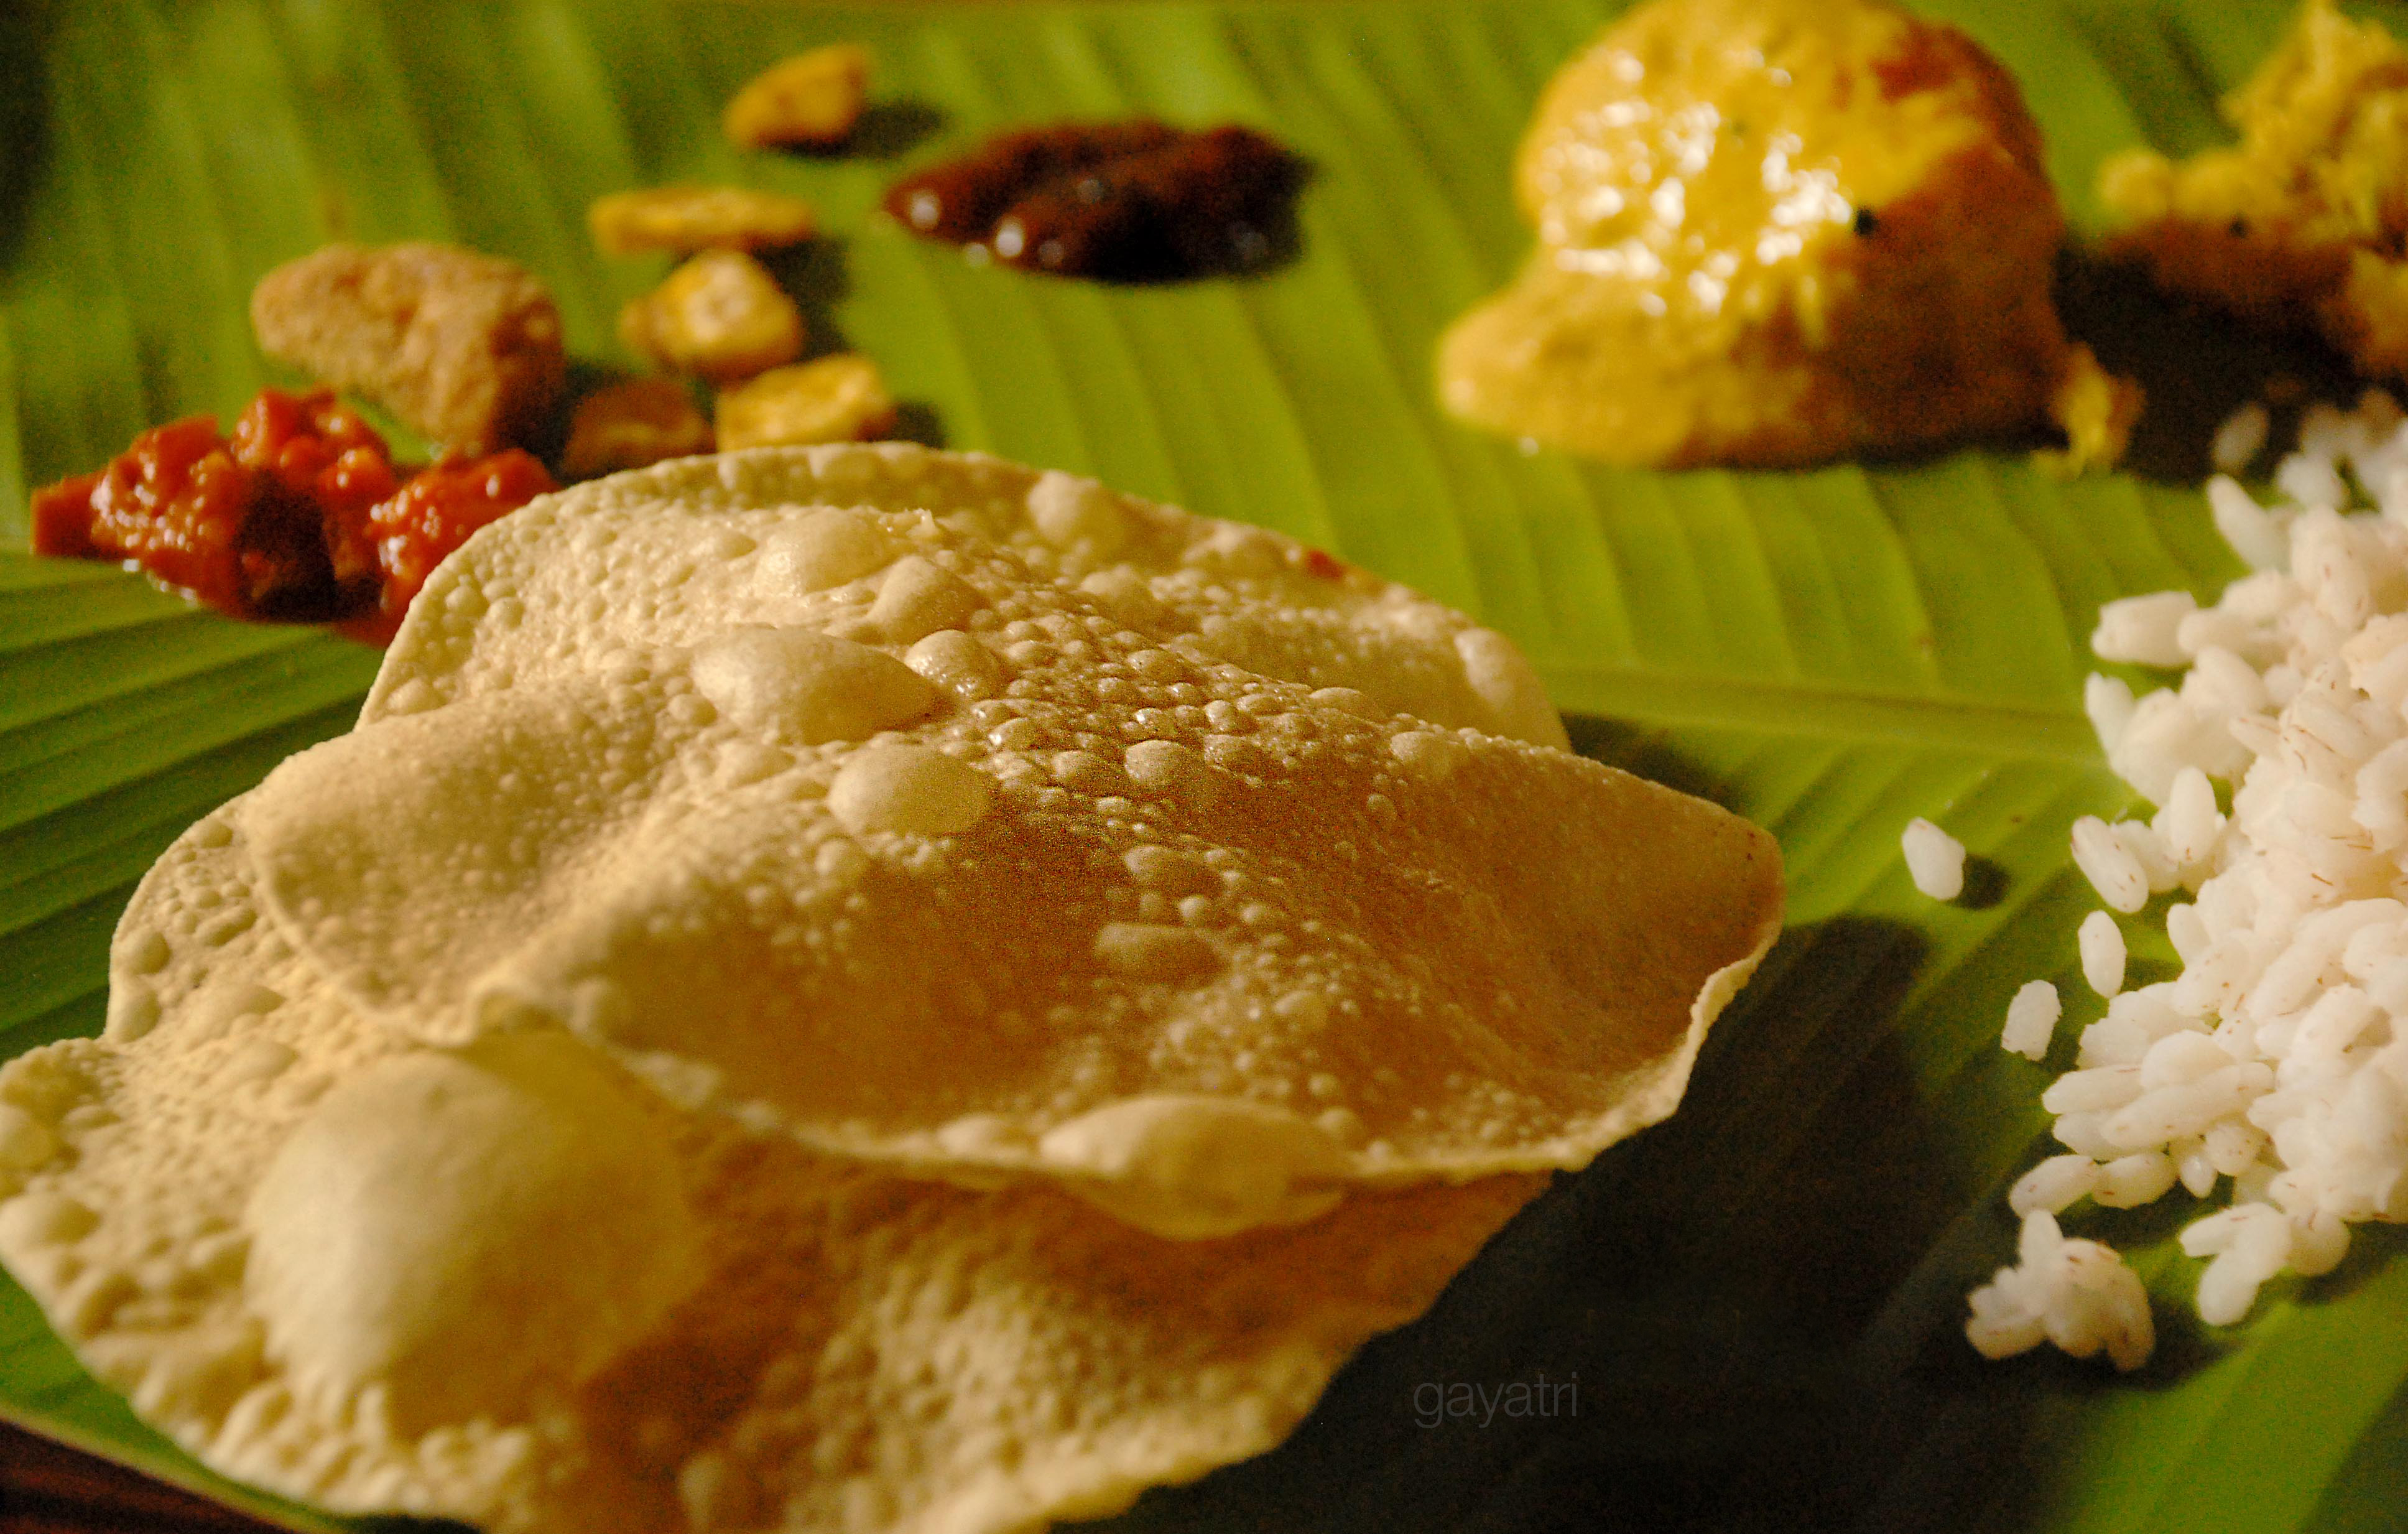 Kerala’s mouth watering food